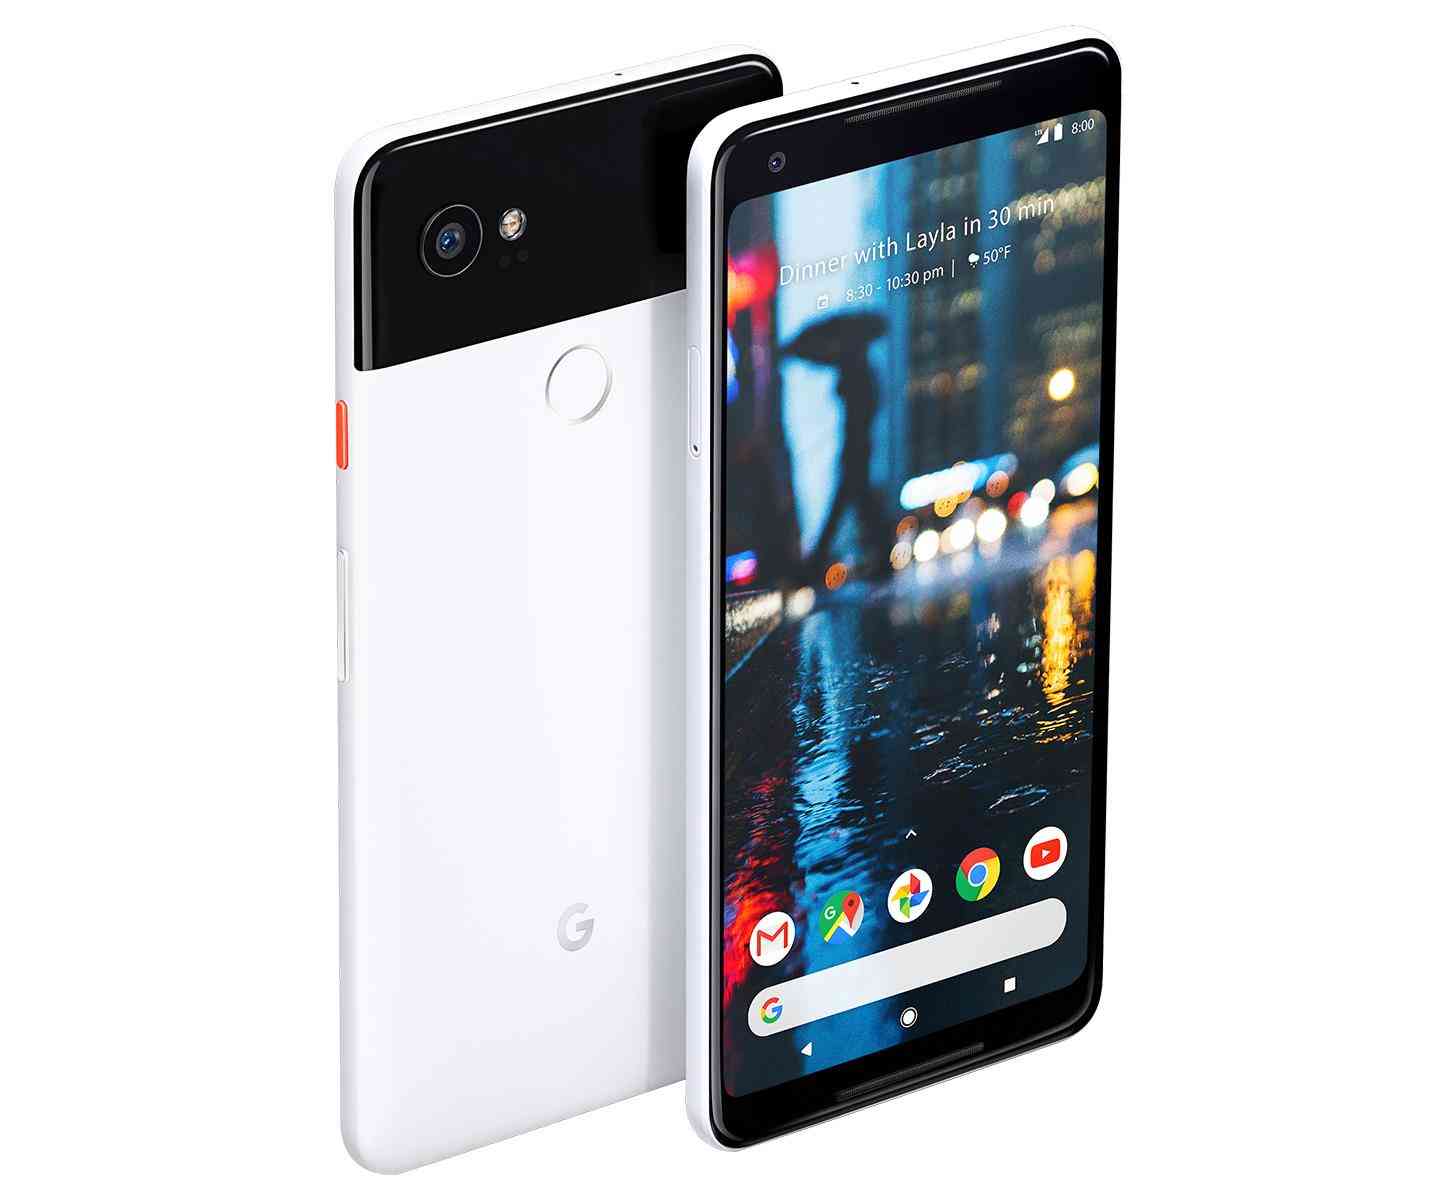 Google Pixel 2 XL black and white panda